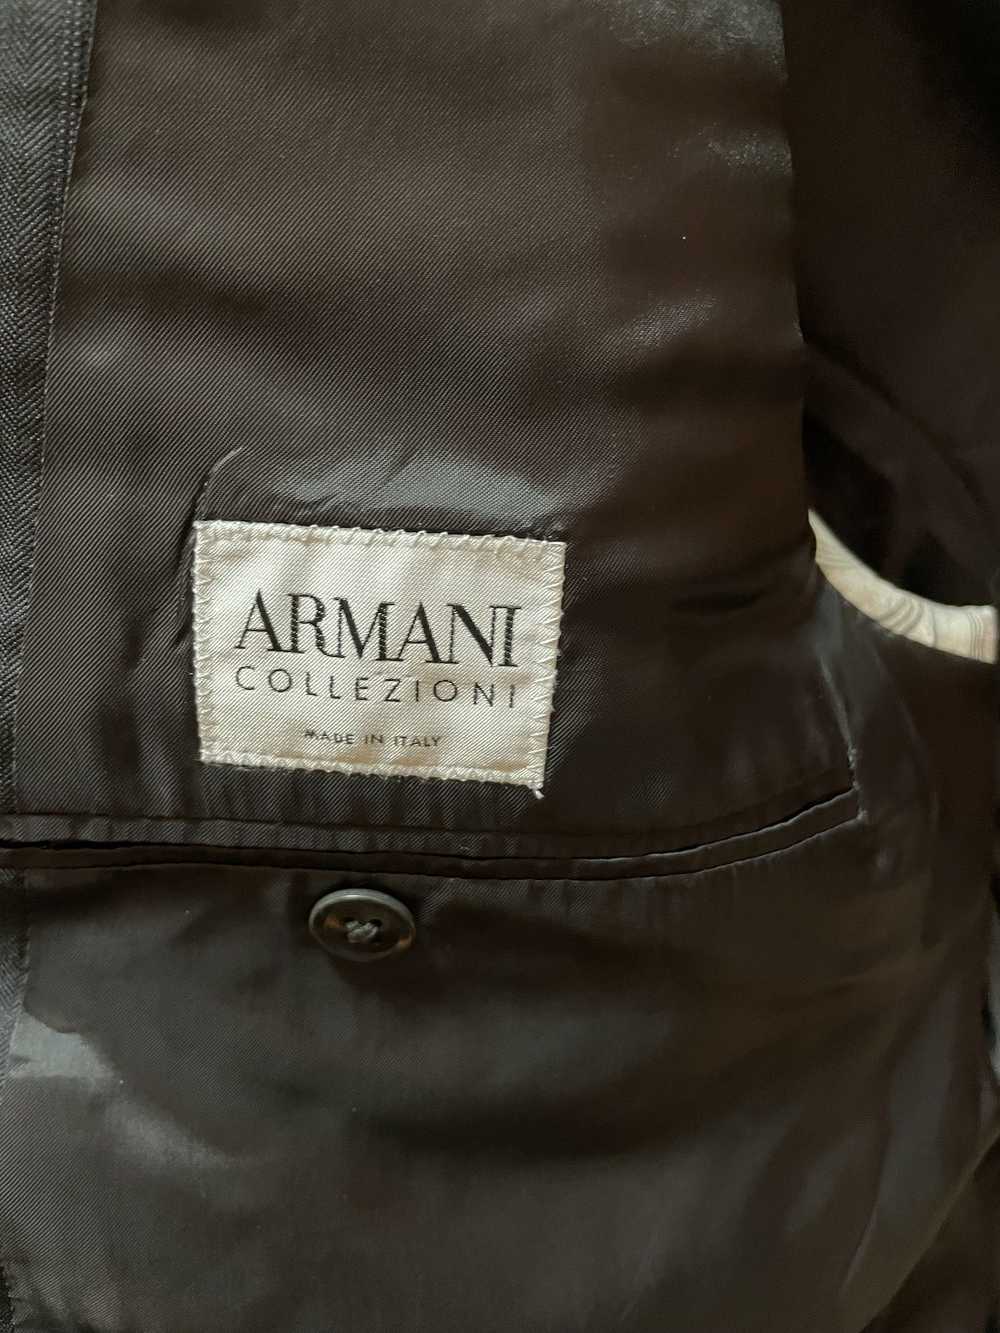 Armani Collezioni Armani Collezioni Suit Jacket - image 3